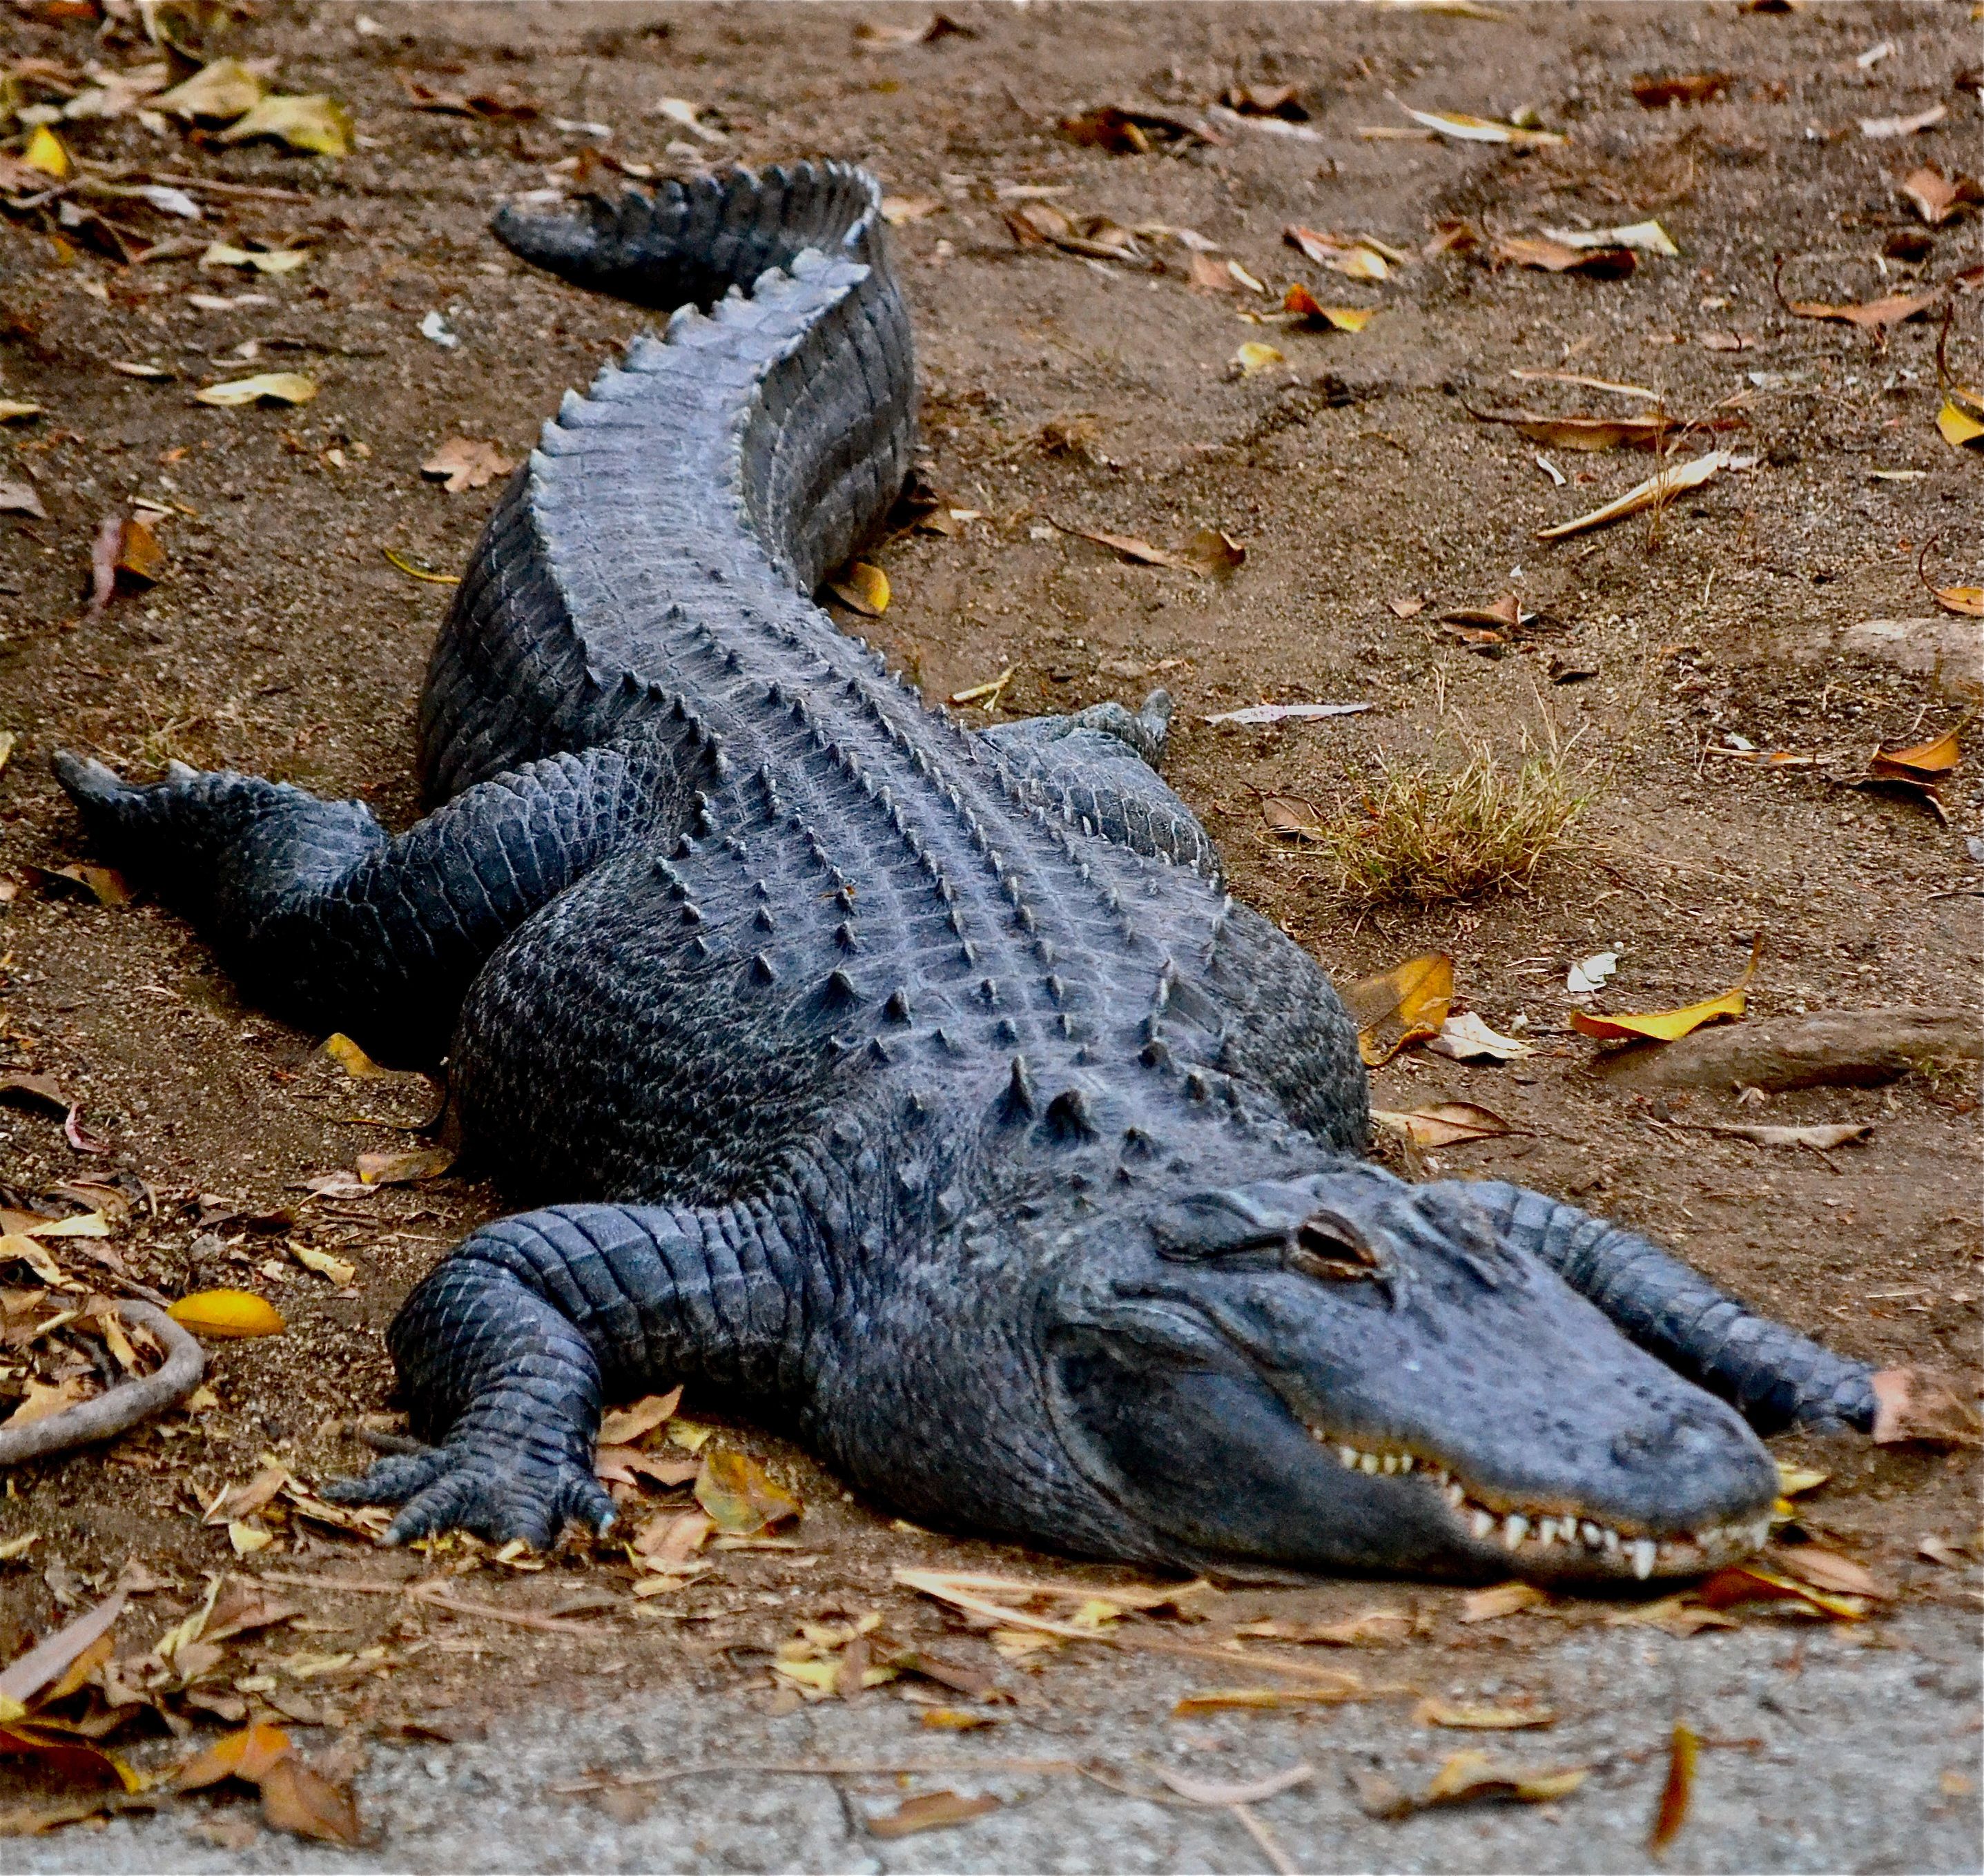 Smiling alligator | Animals | Pinterest | Alligators and Animal